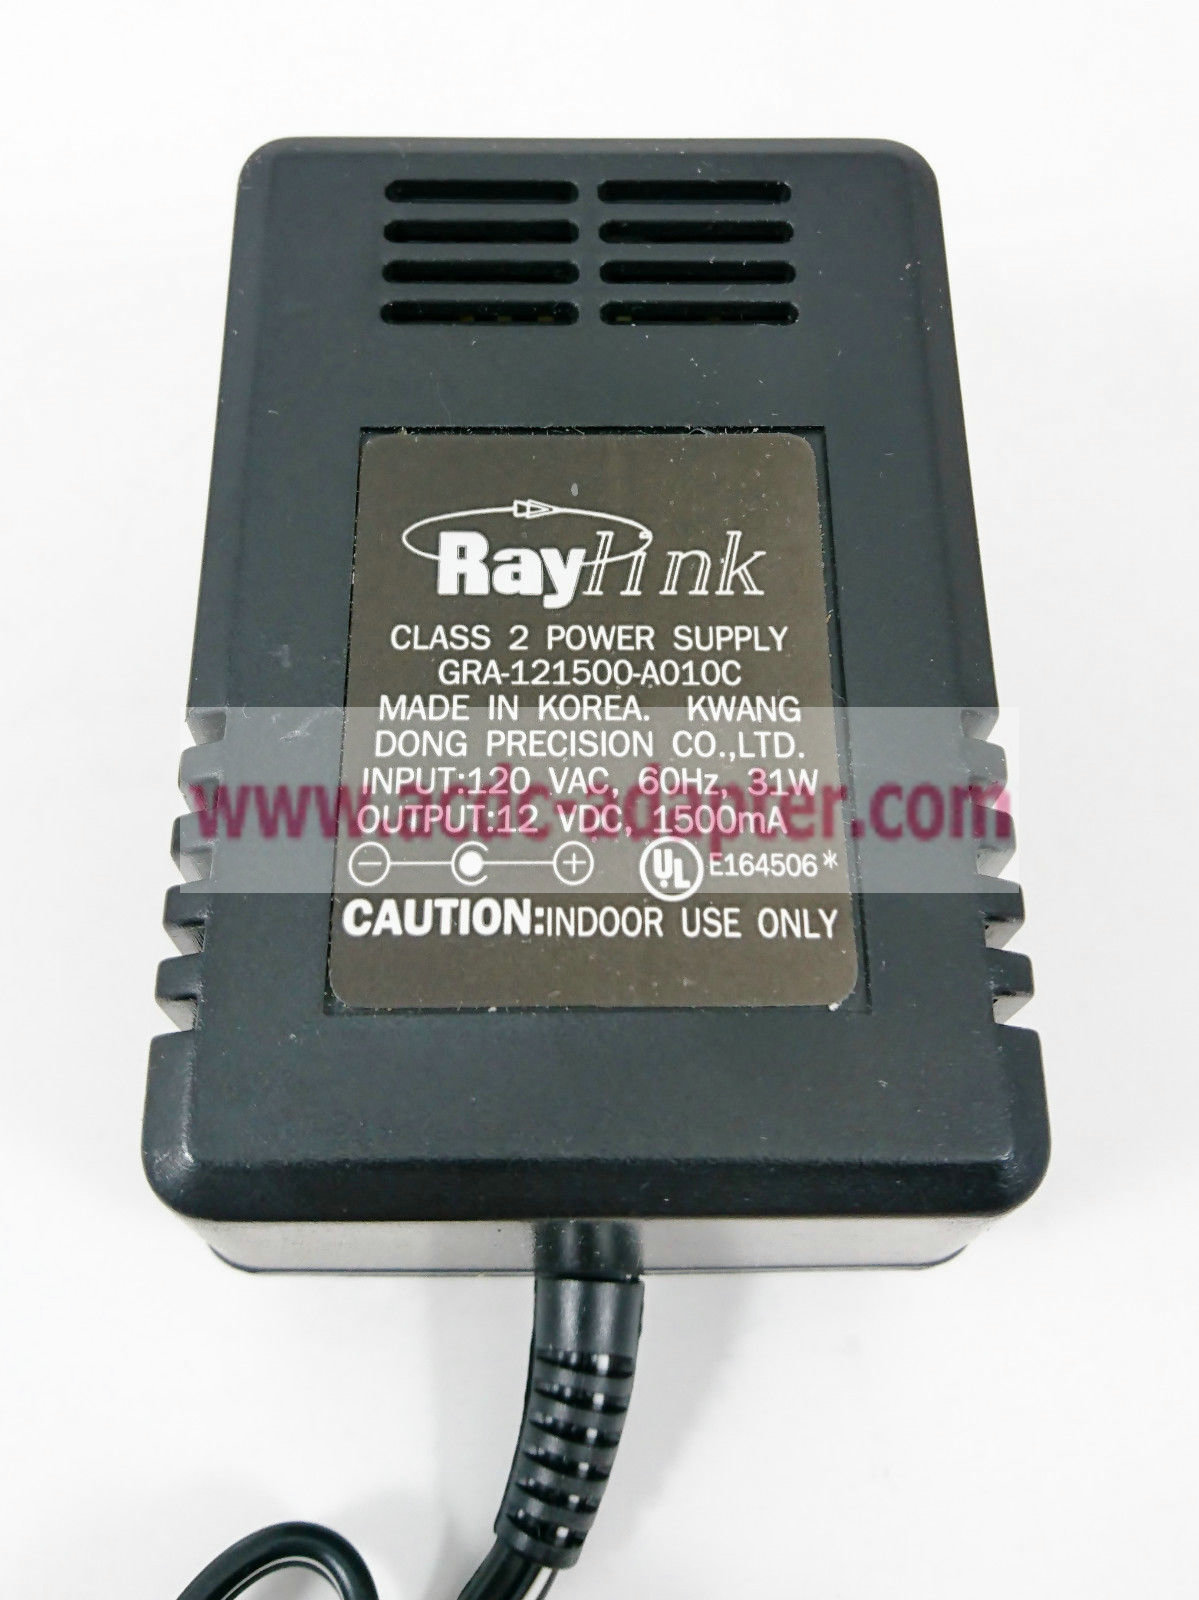 Brand new 12V 1500mA (1.5 Amp) Raylink GRA-121500-A010C 31W Class 2 Power Supply